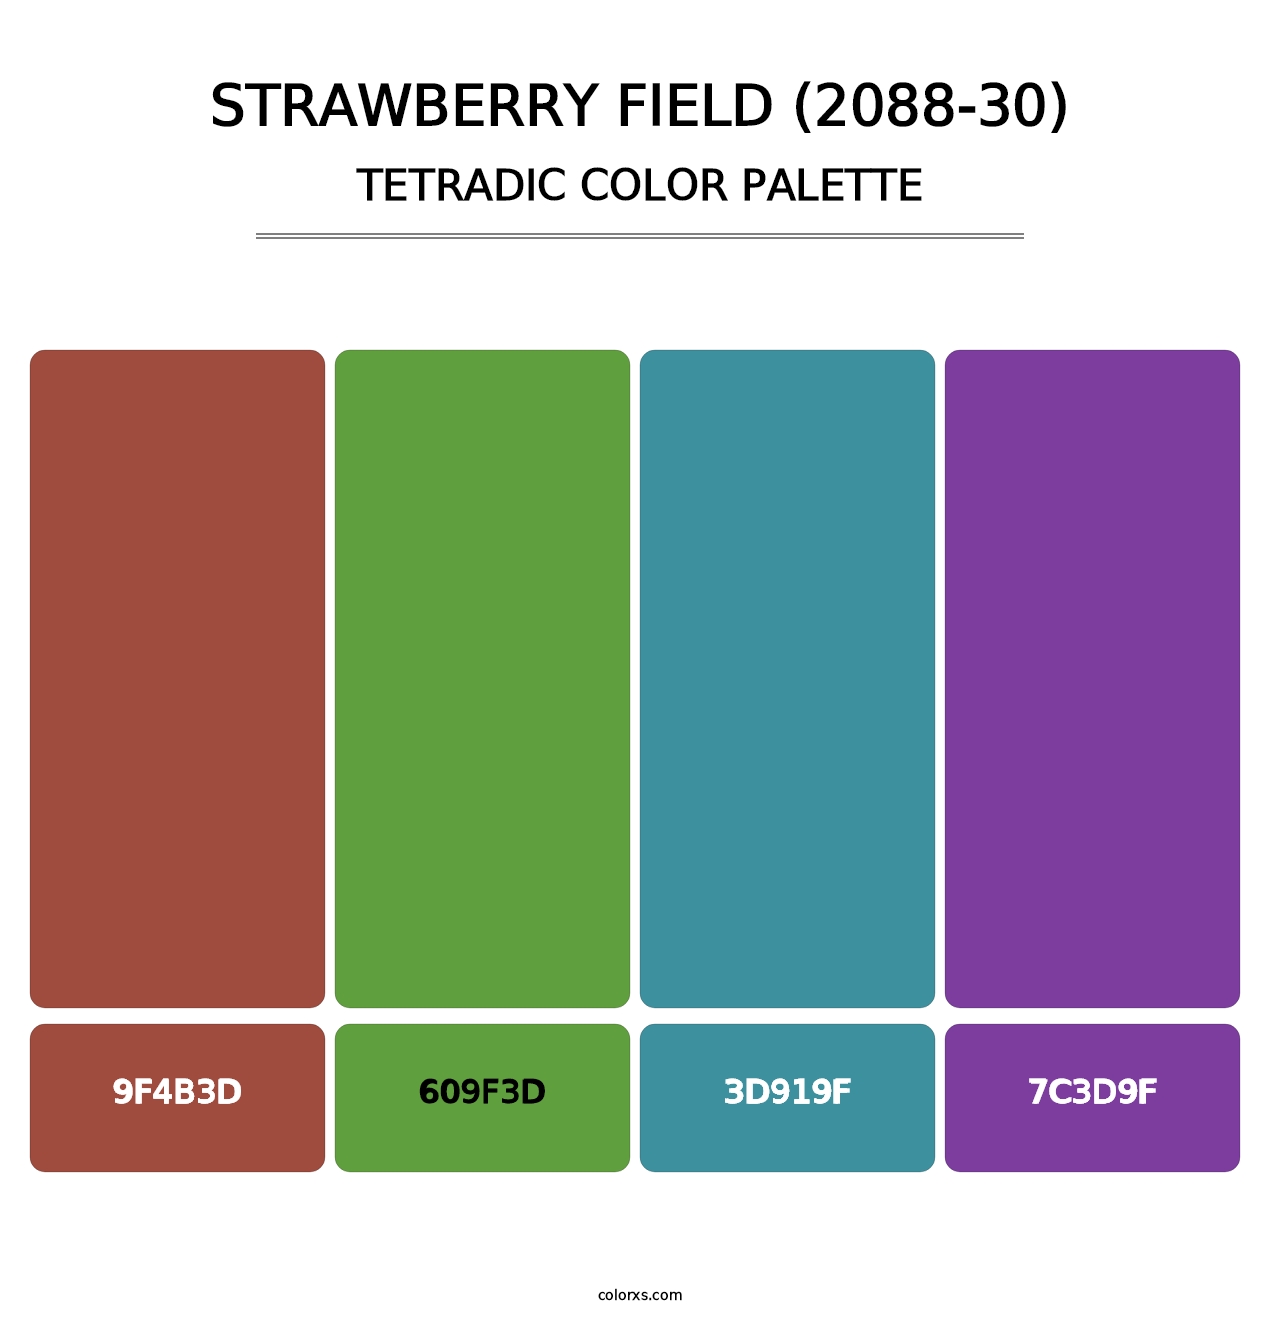 Strawberry Field (2088-30) - Tetradic Color Palette